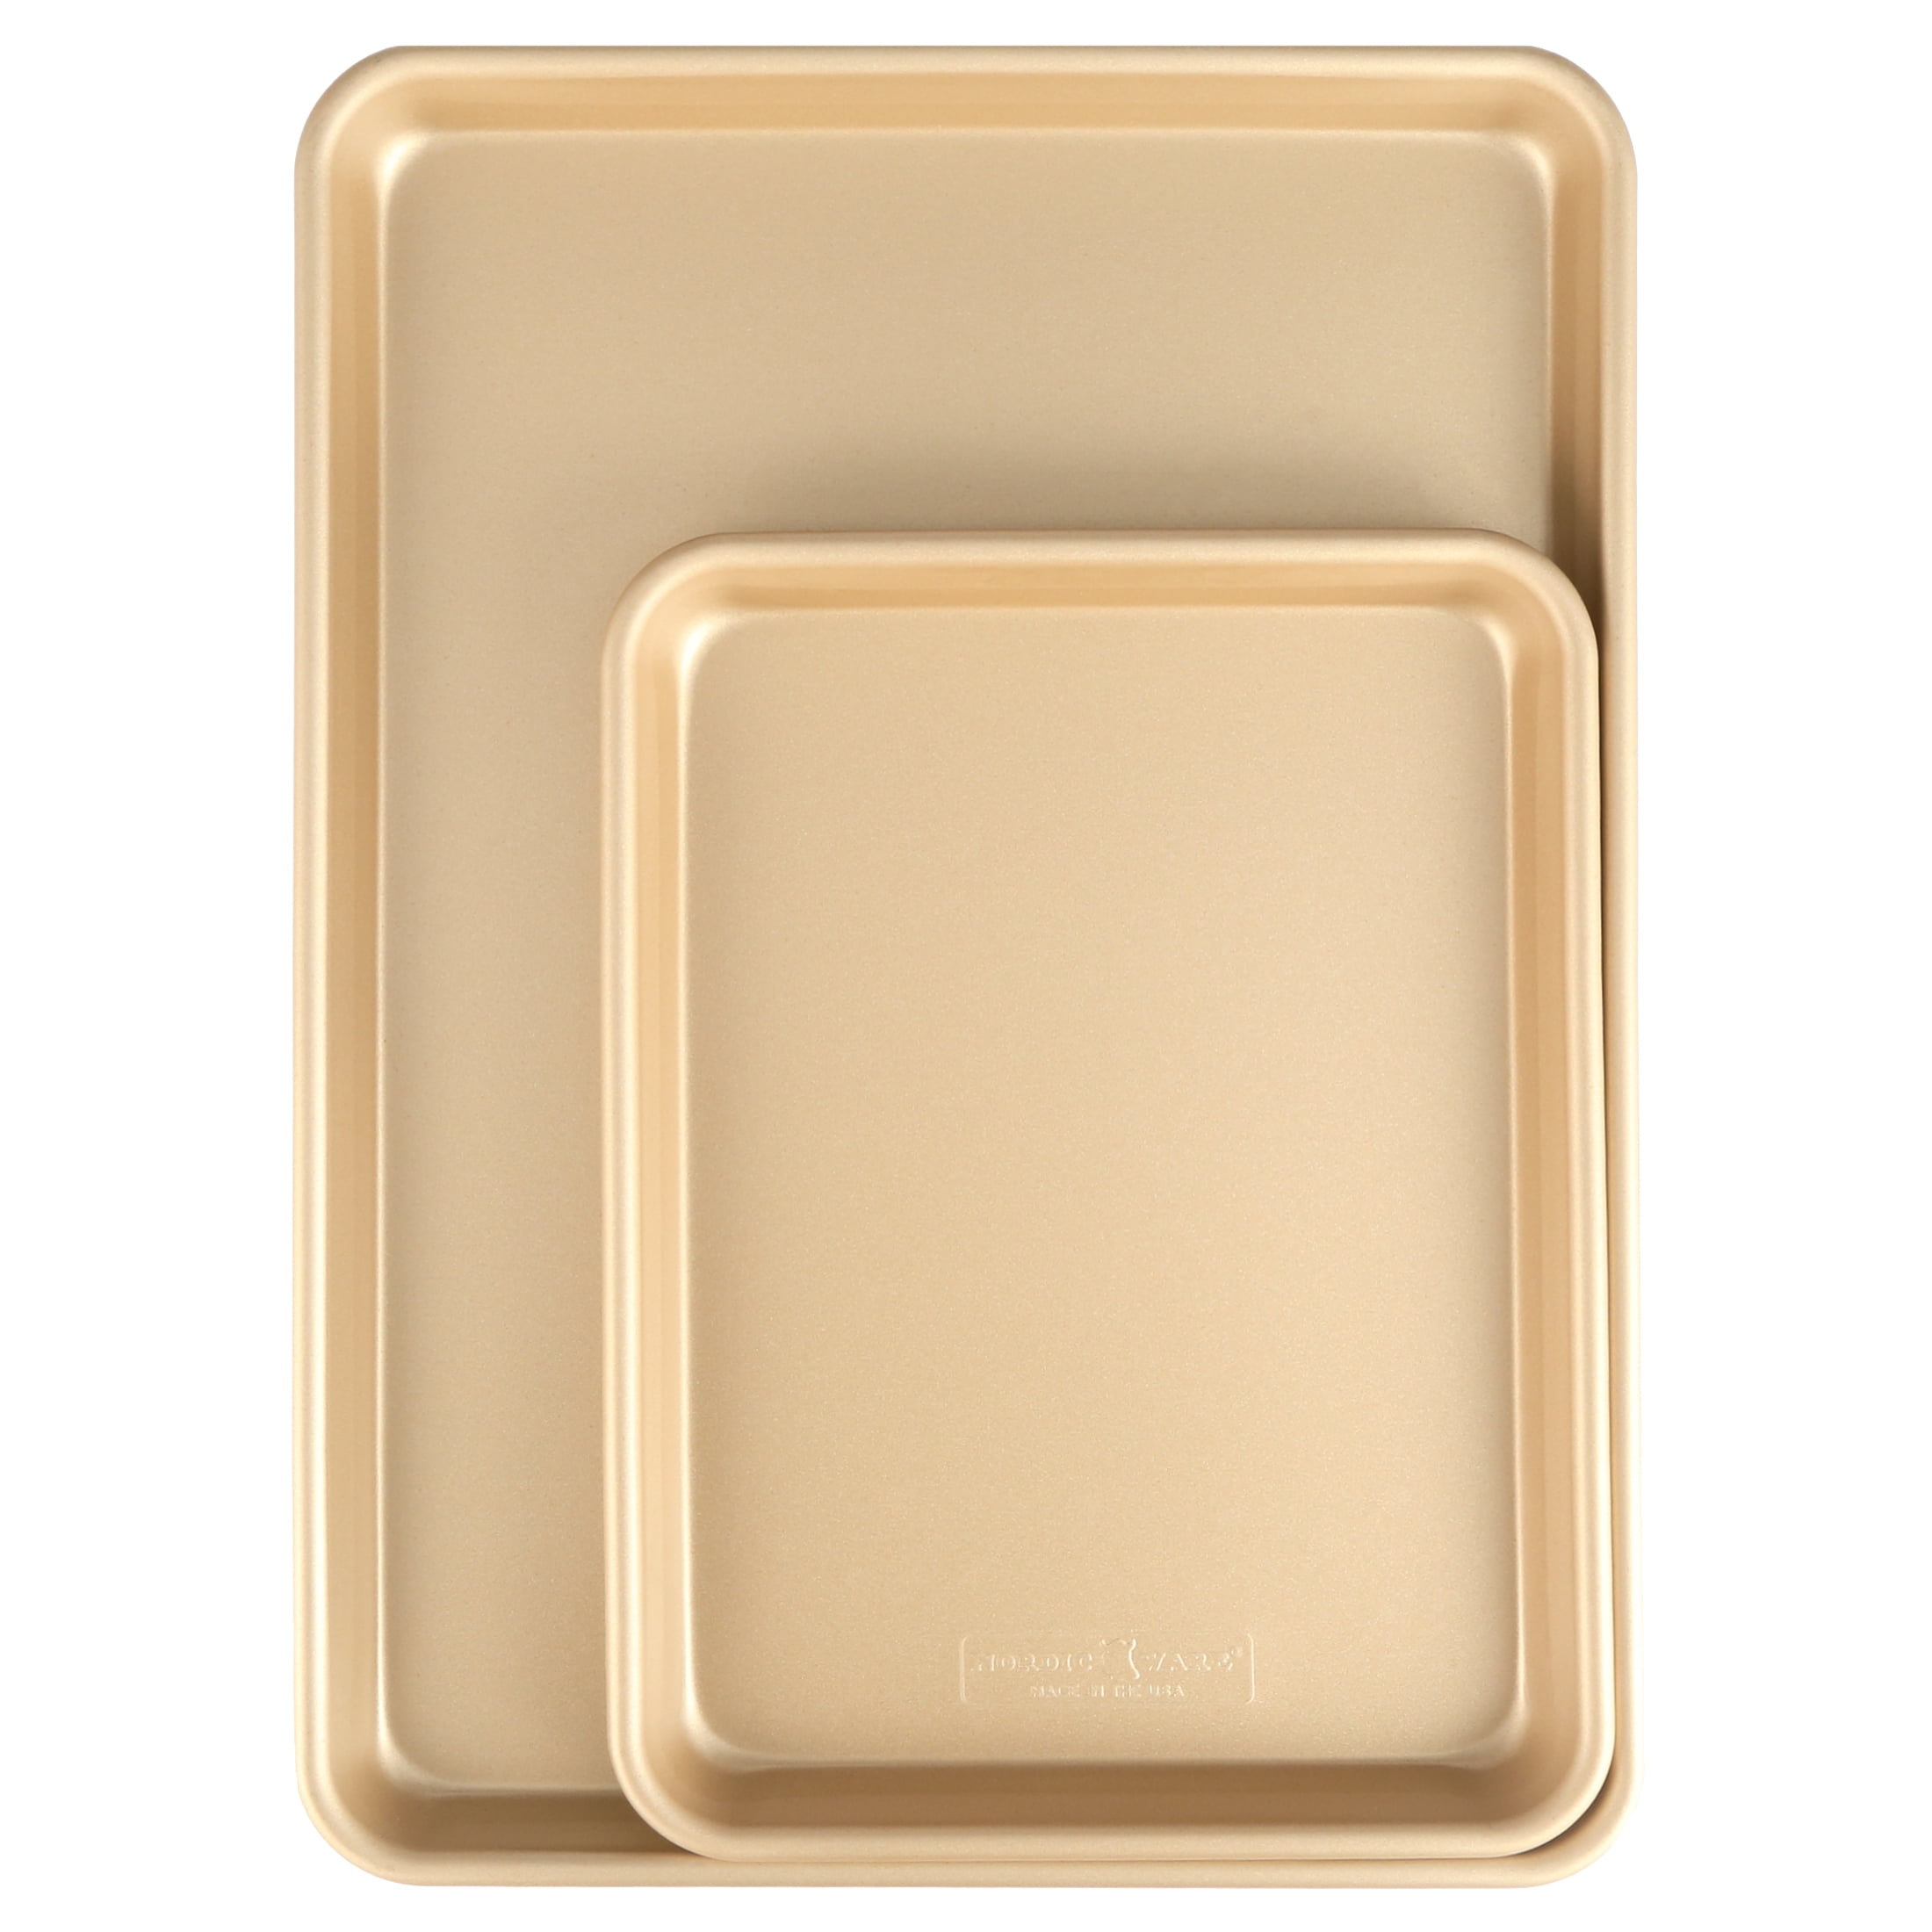 Nordic Ware Naturals Gold Nonstick Half Sheet Pan 2 Pack by World Market